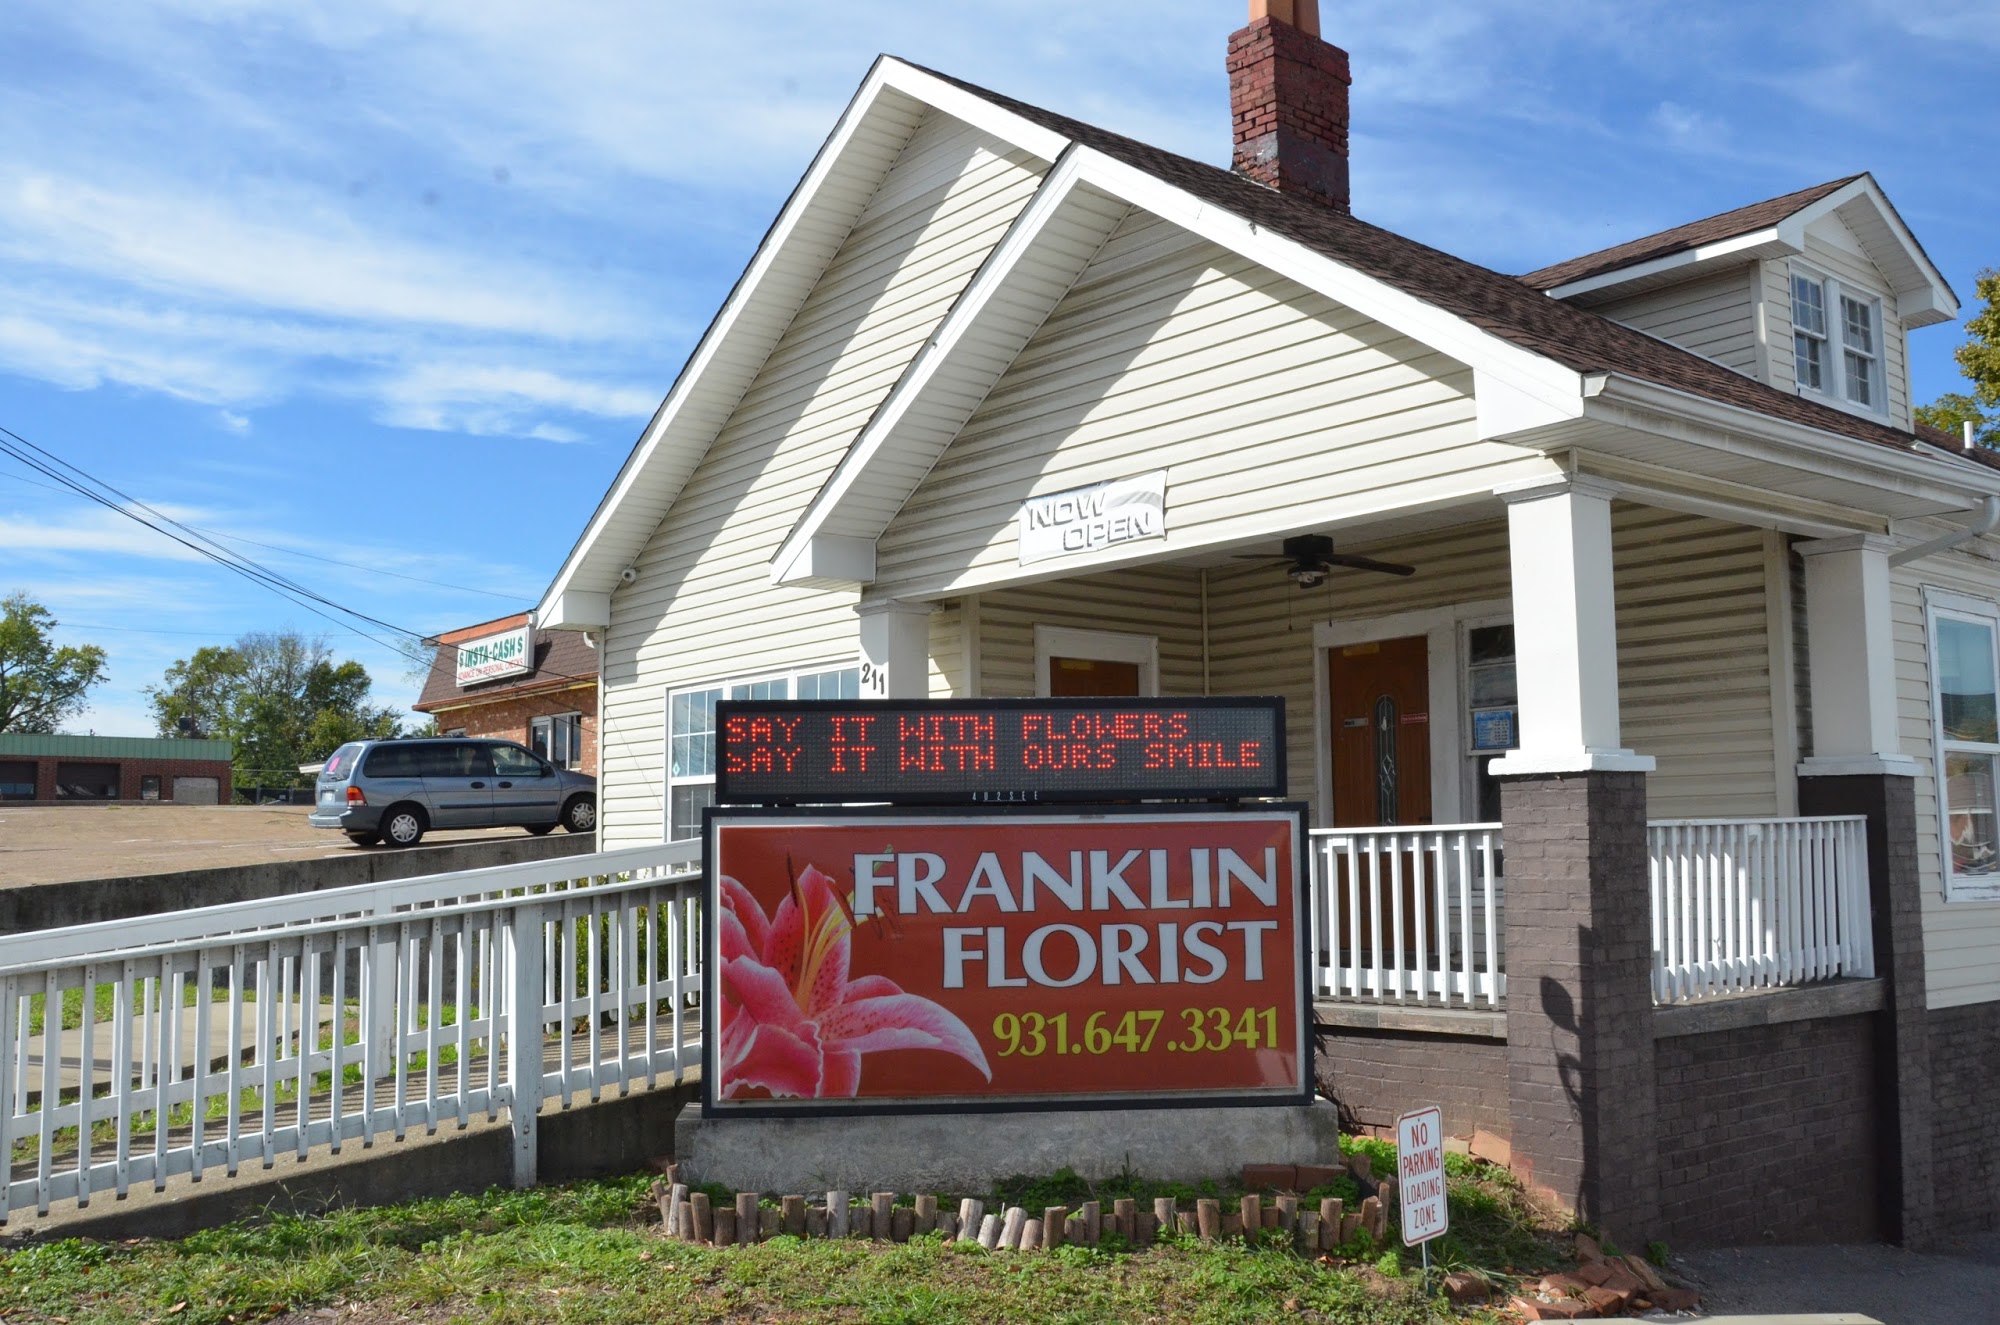 Franklin Street Florist